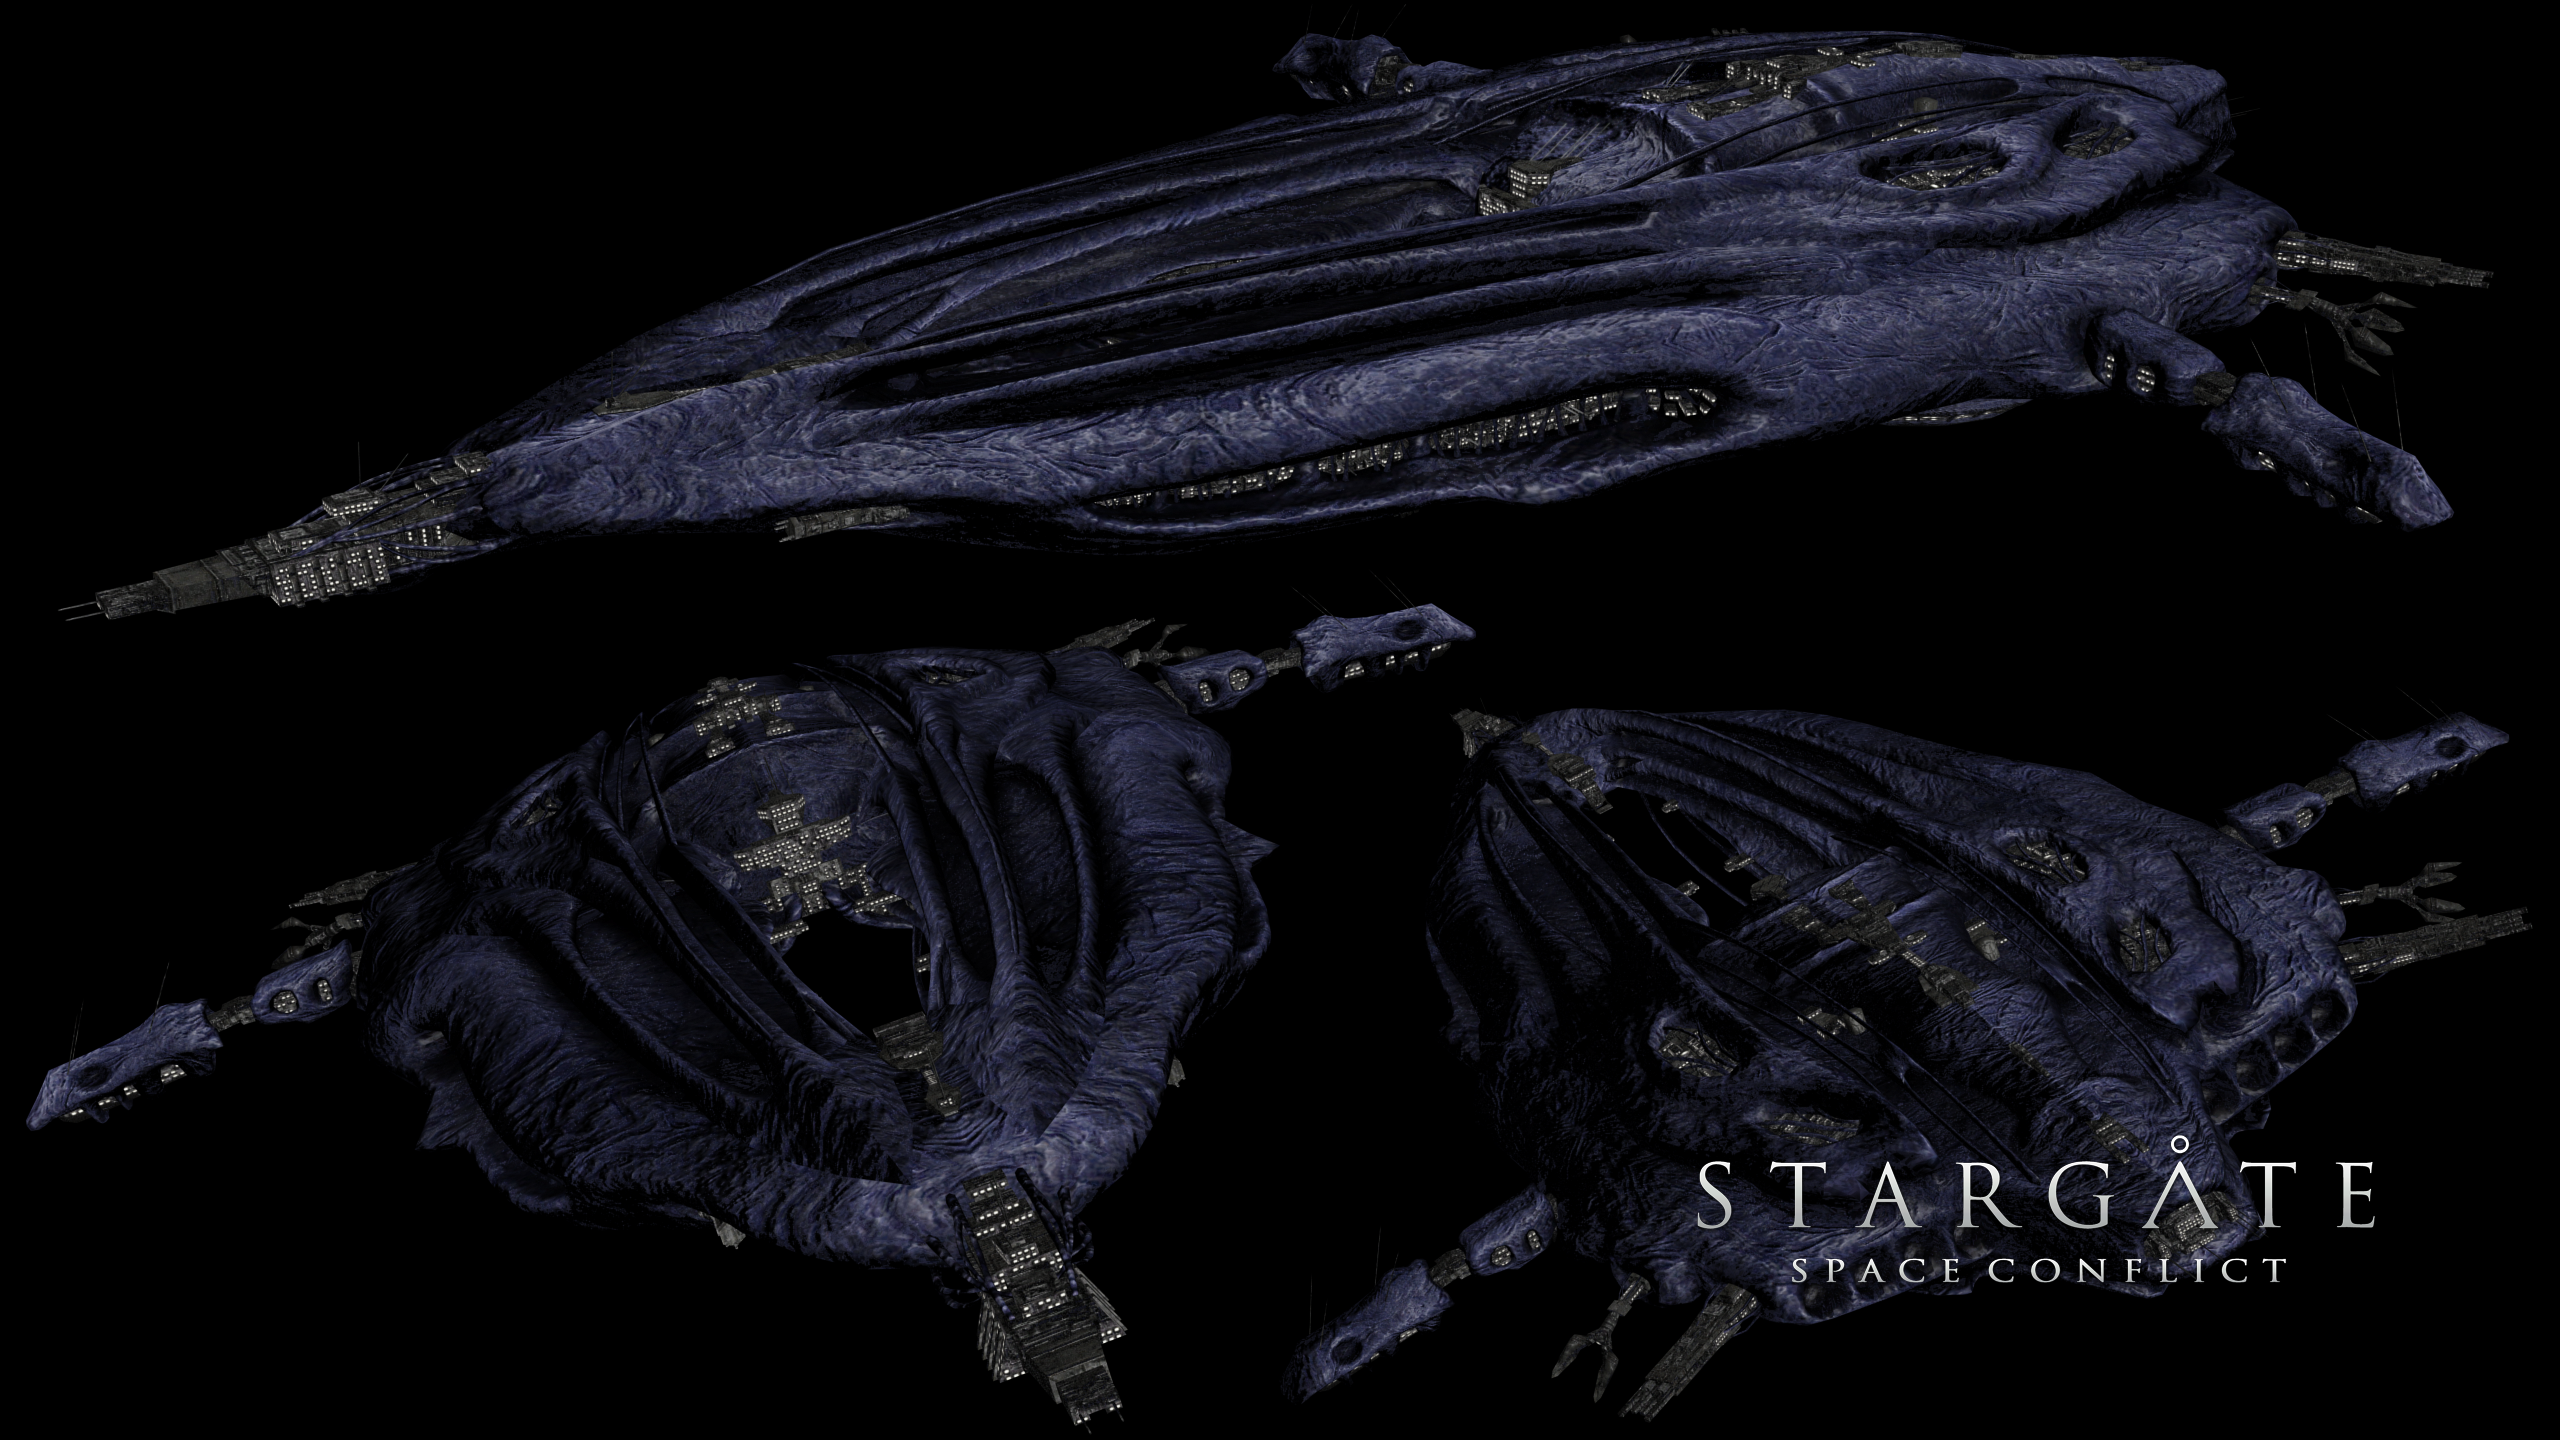 Stargate wraith hive ship size